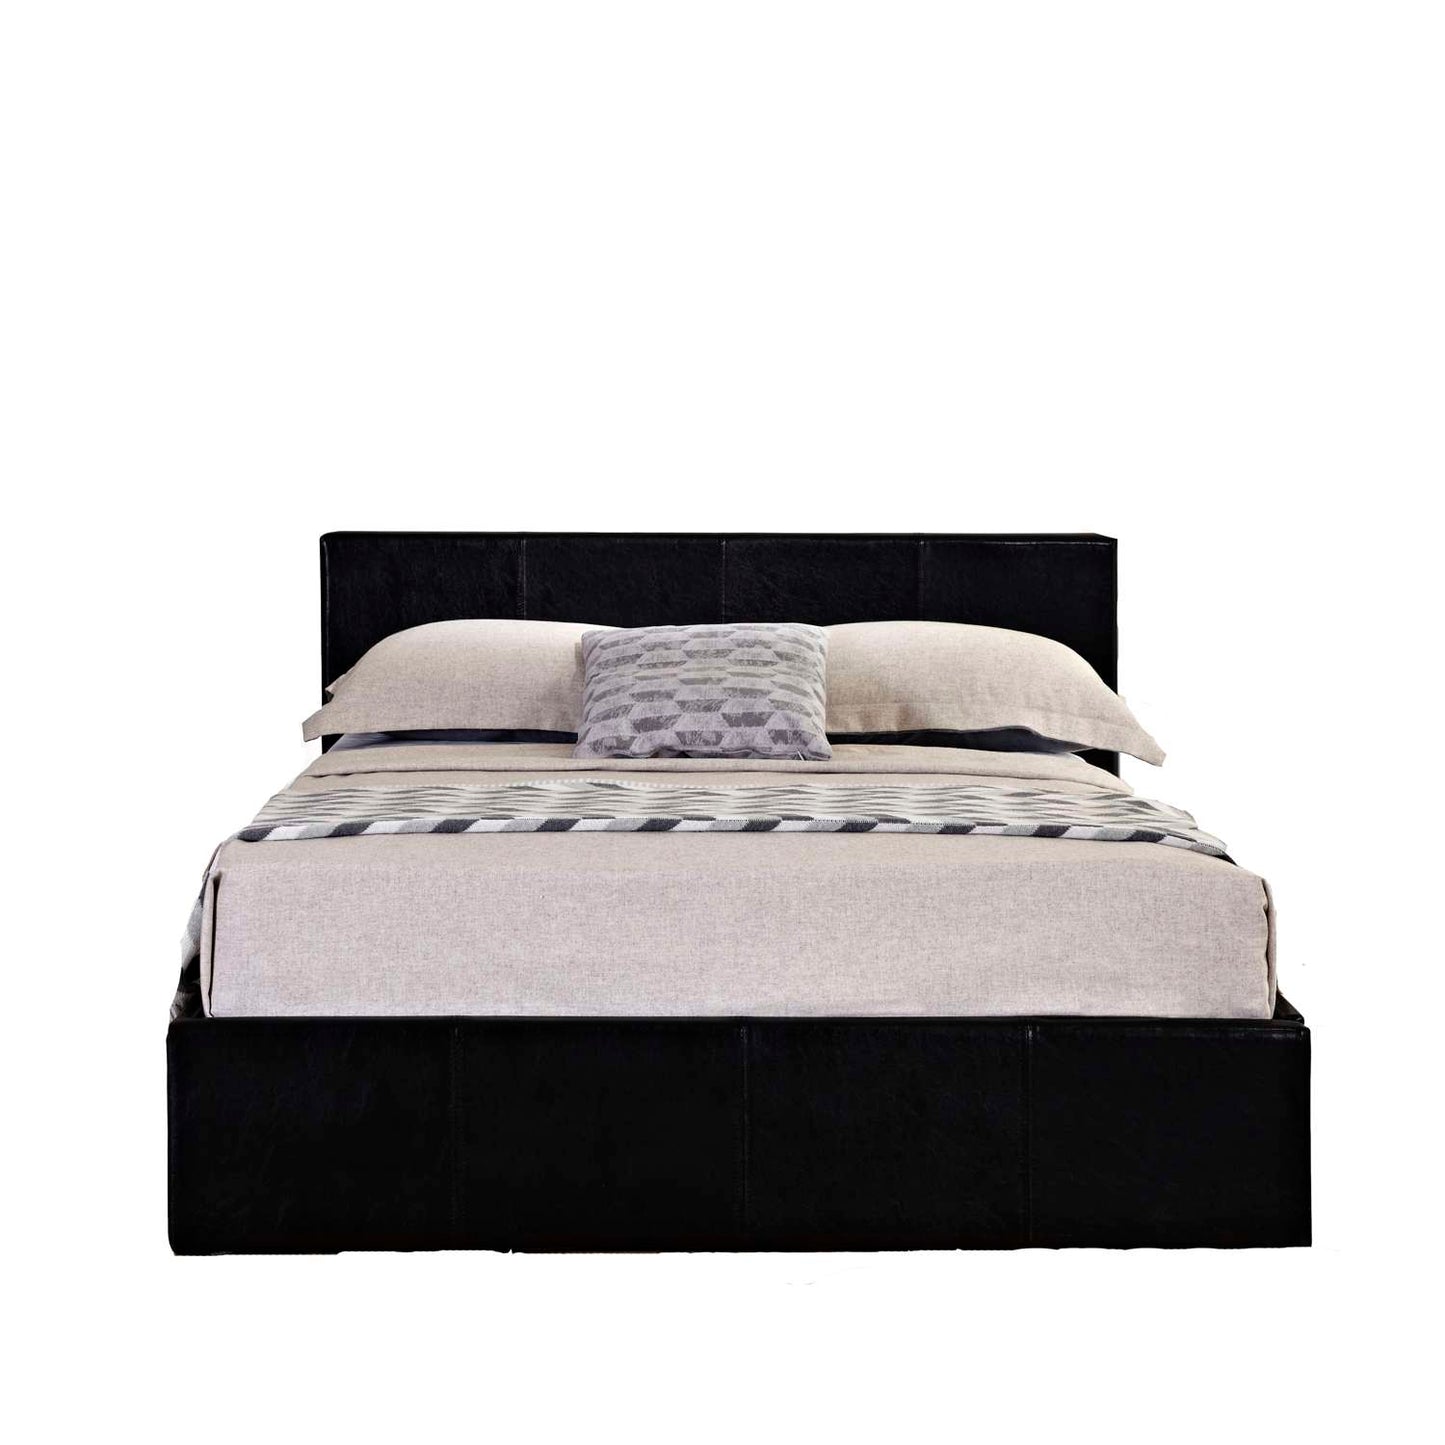 Berlin Black Faux Leather Ottoman Bed